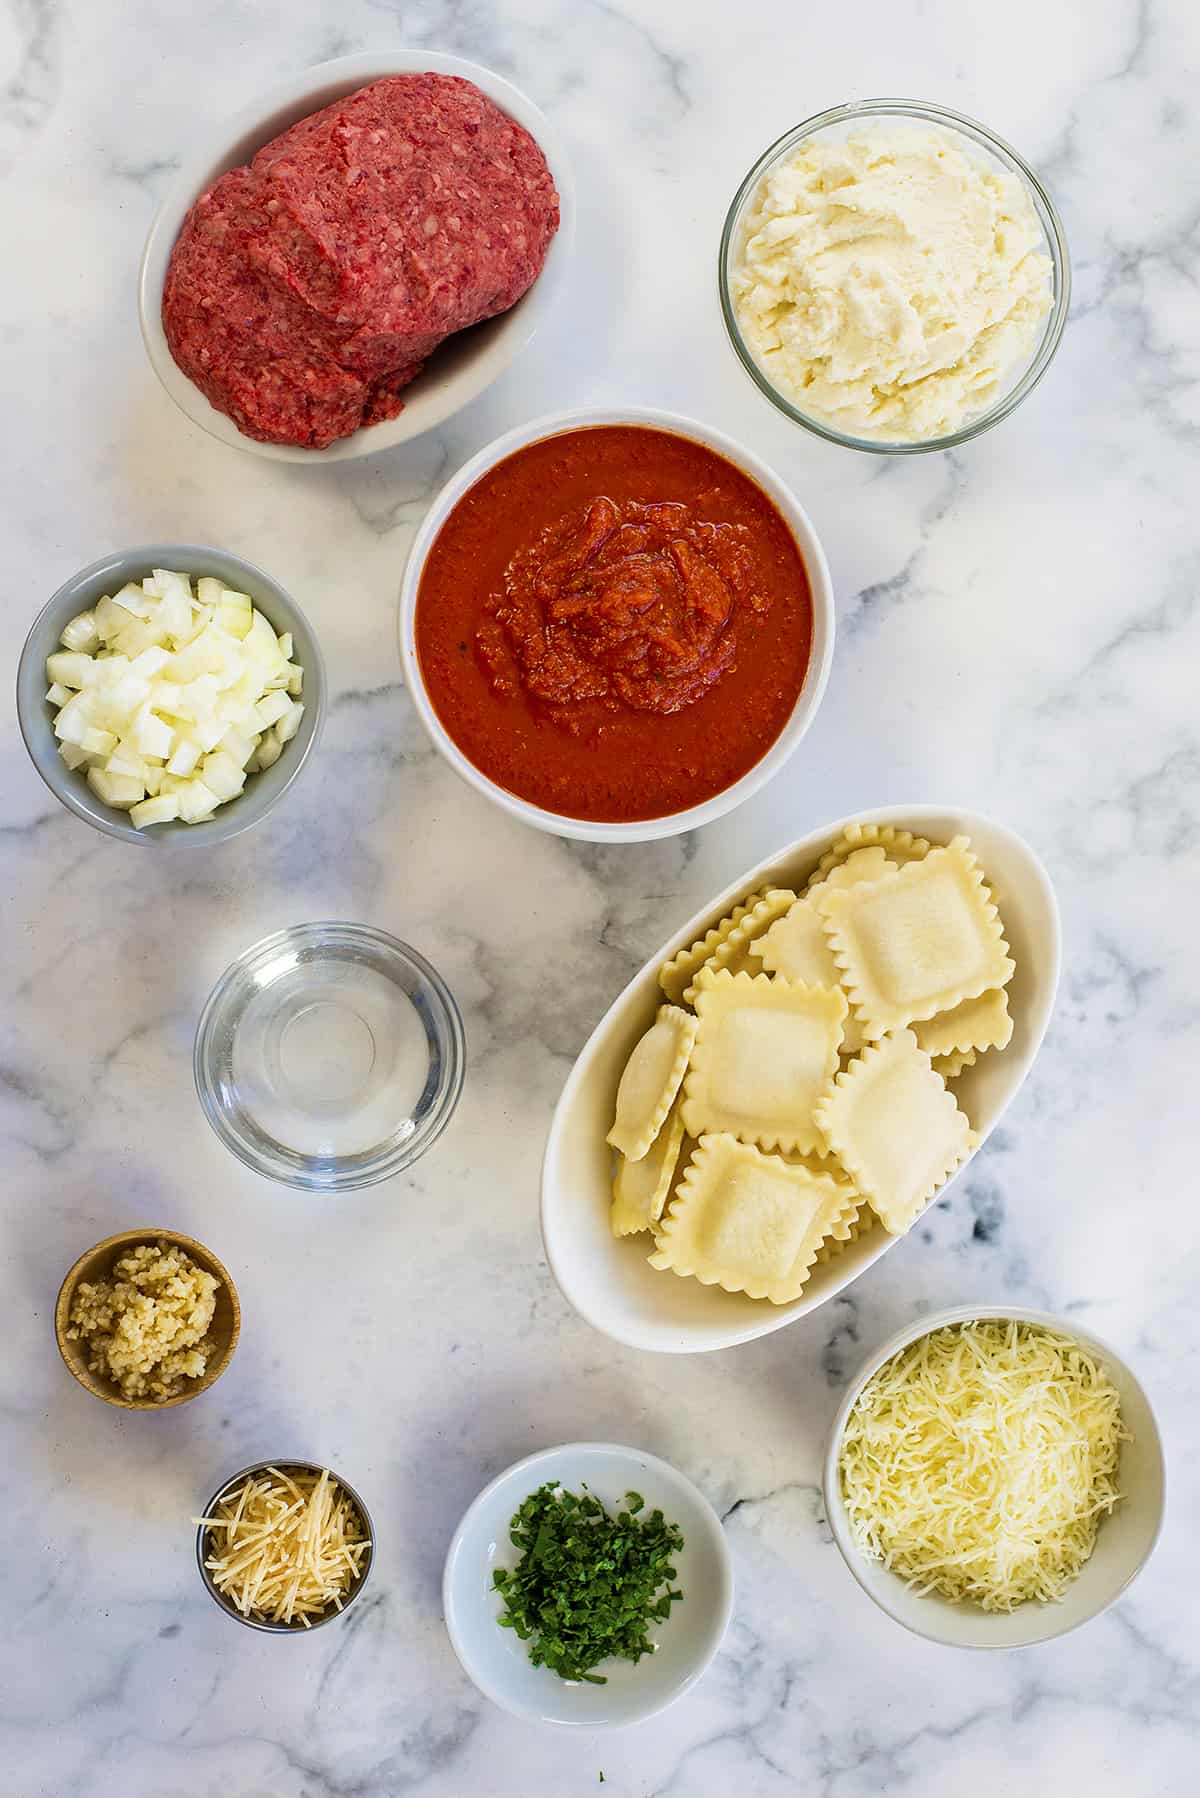 Ingredients for skillet lasagna.